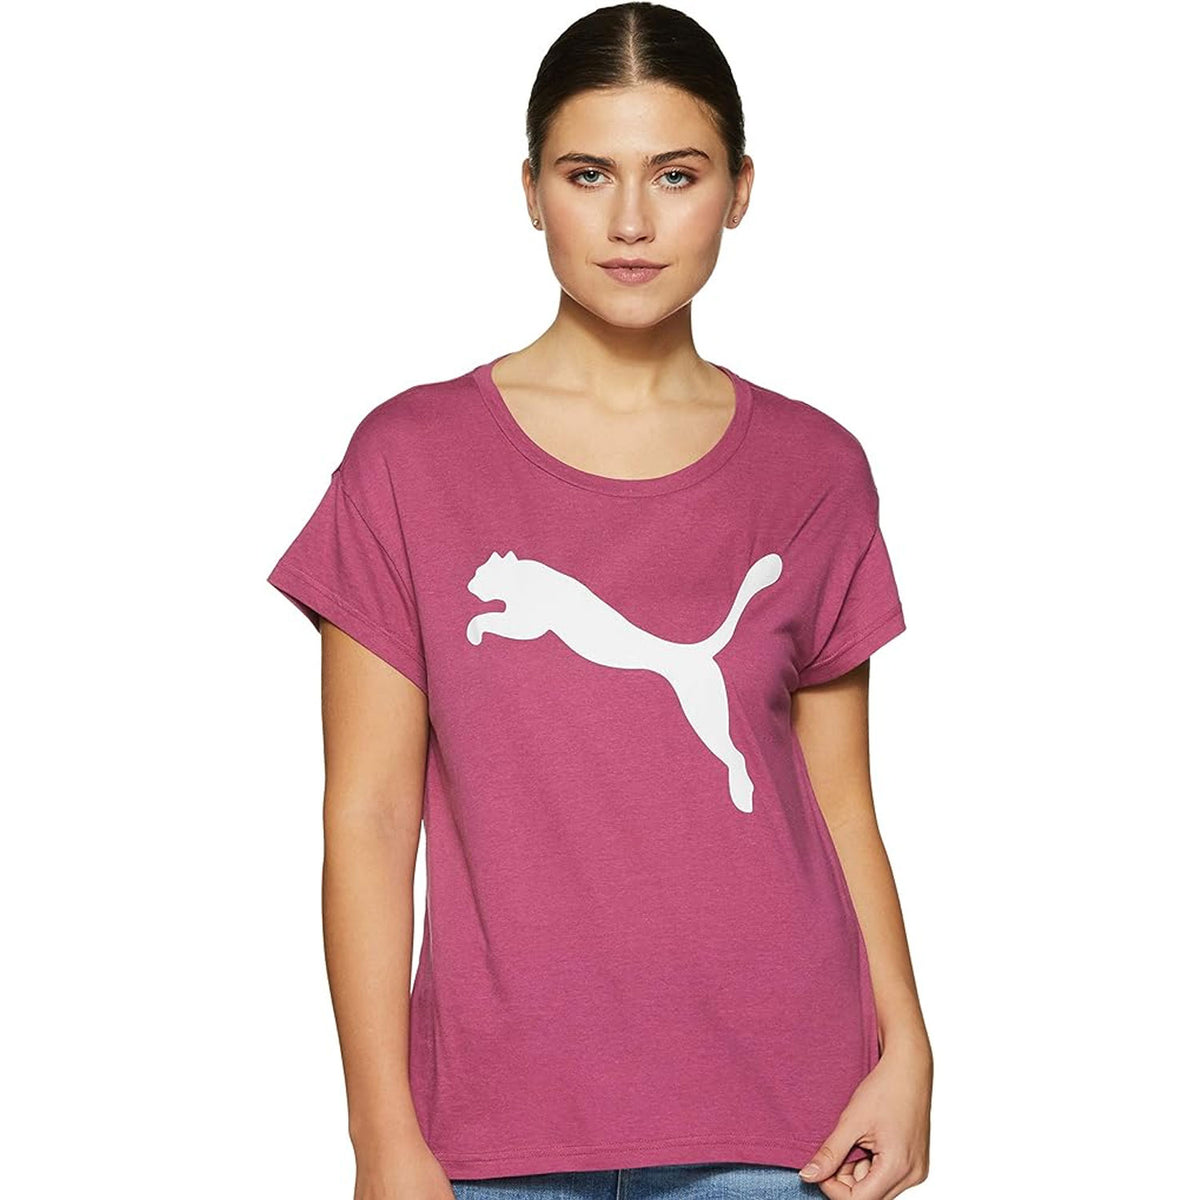 Puma Womens Active Short Sleeve T-Shirt - Magenta